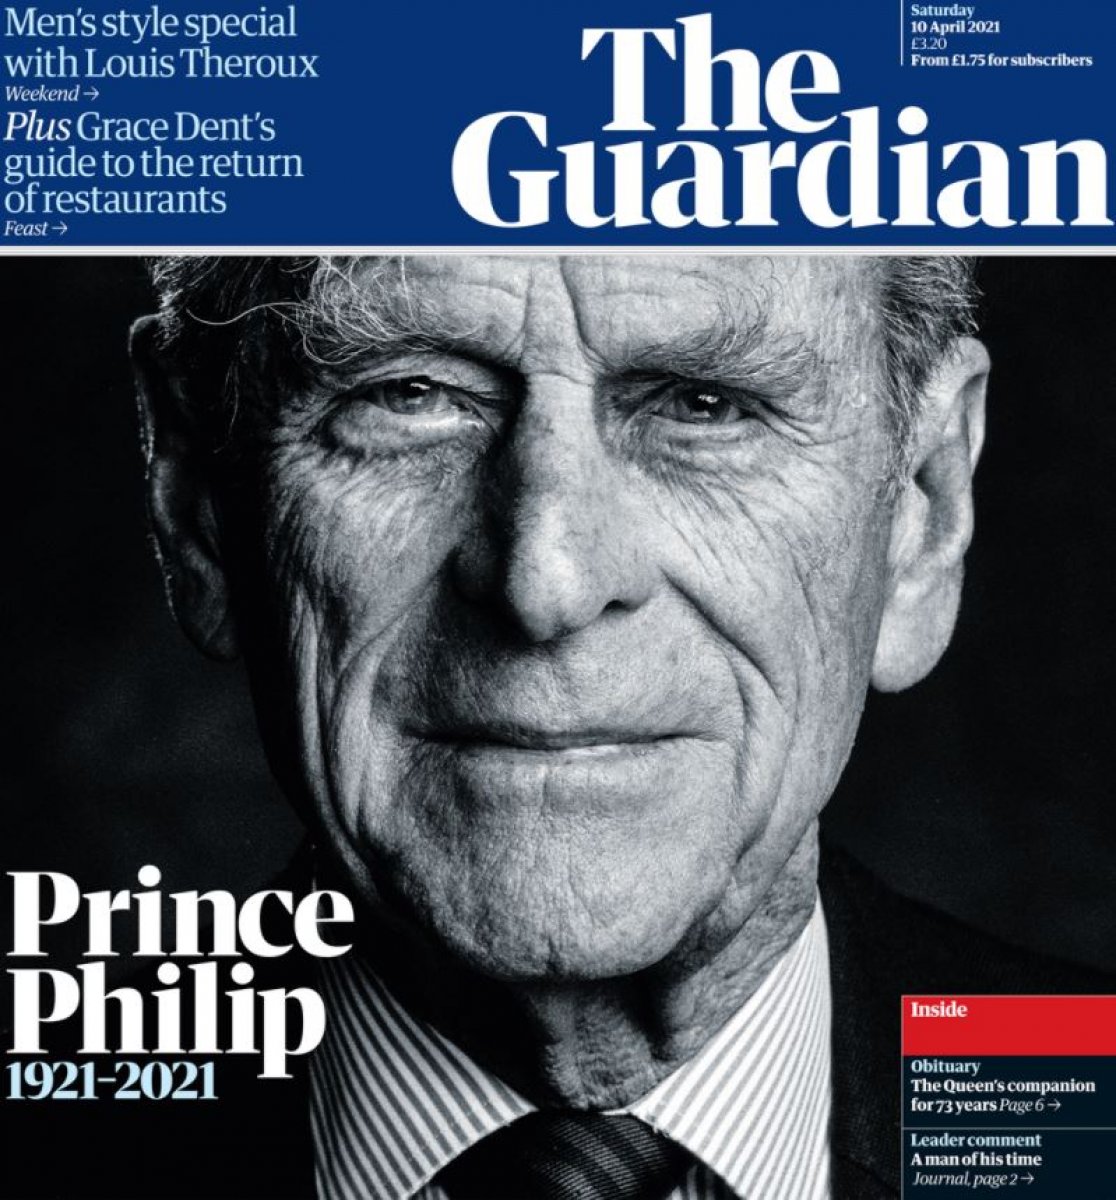 Death of Prince Philip #5 in the British press